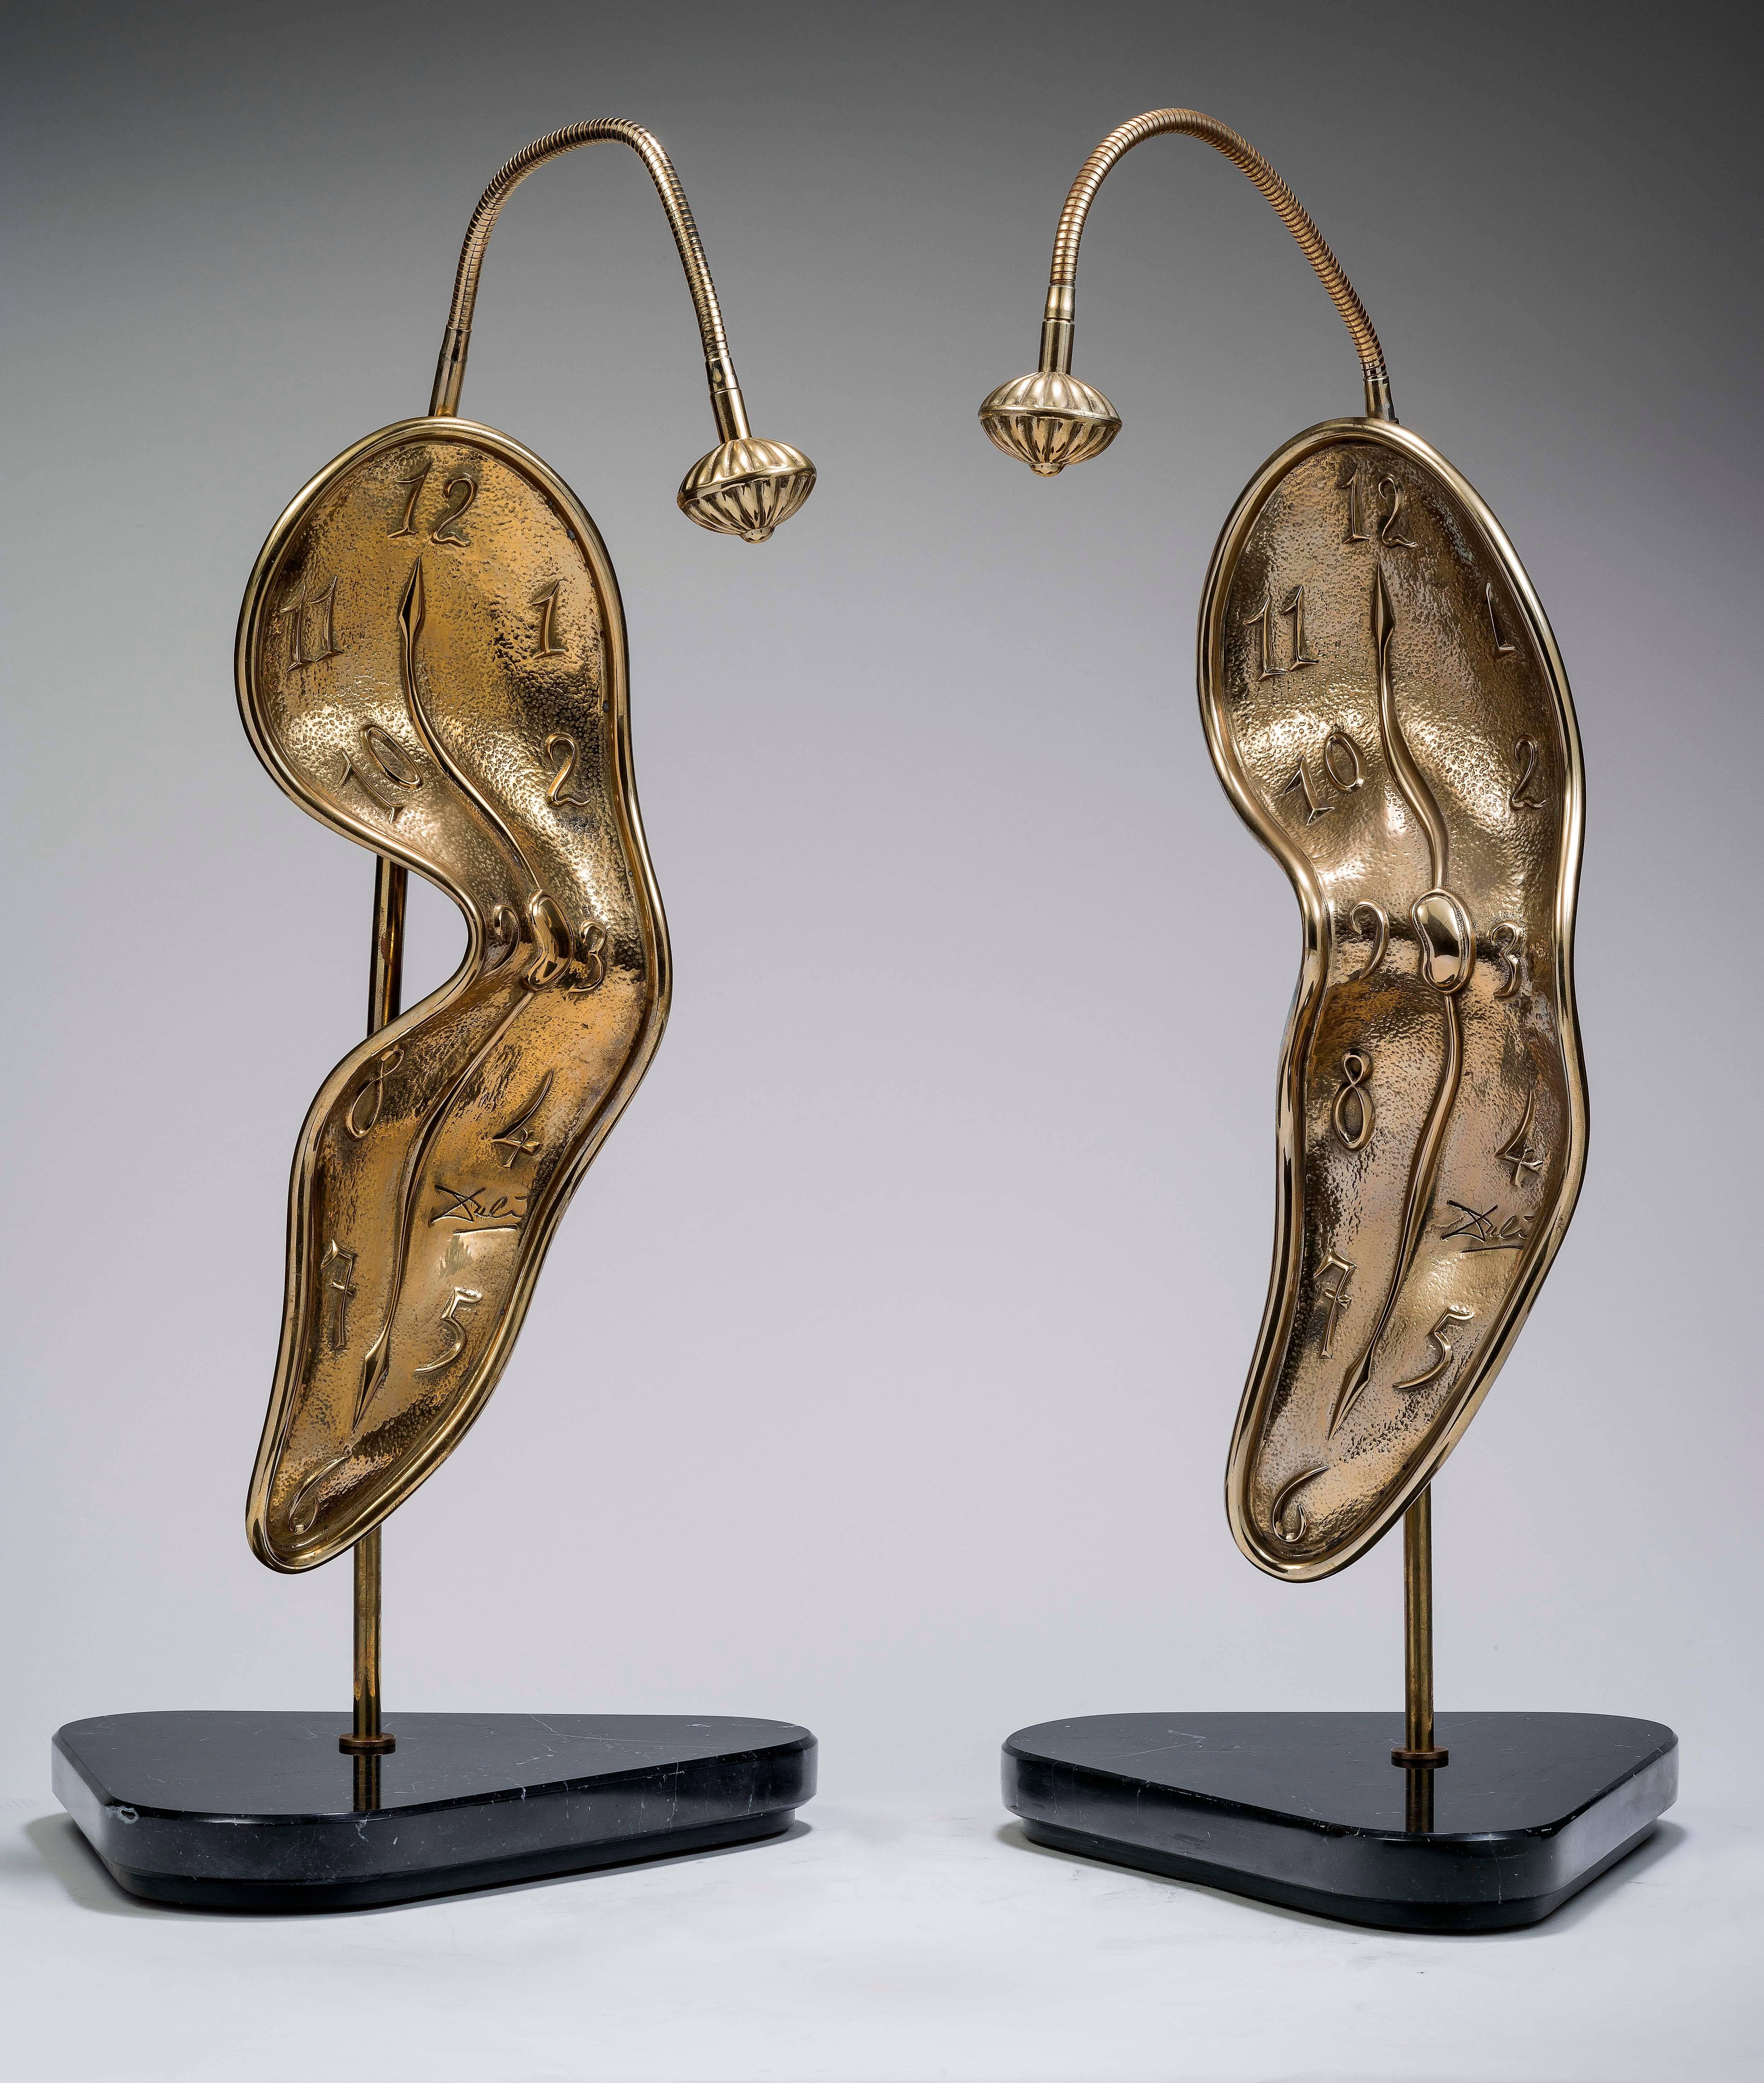 Salvador Dalí Figurative Sculpture - 2 Montres Molles (Two The Soft Watches)